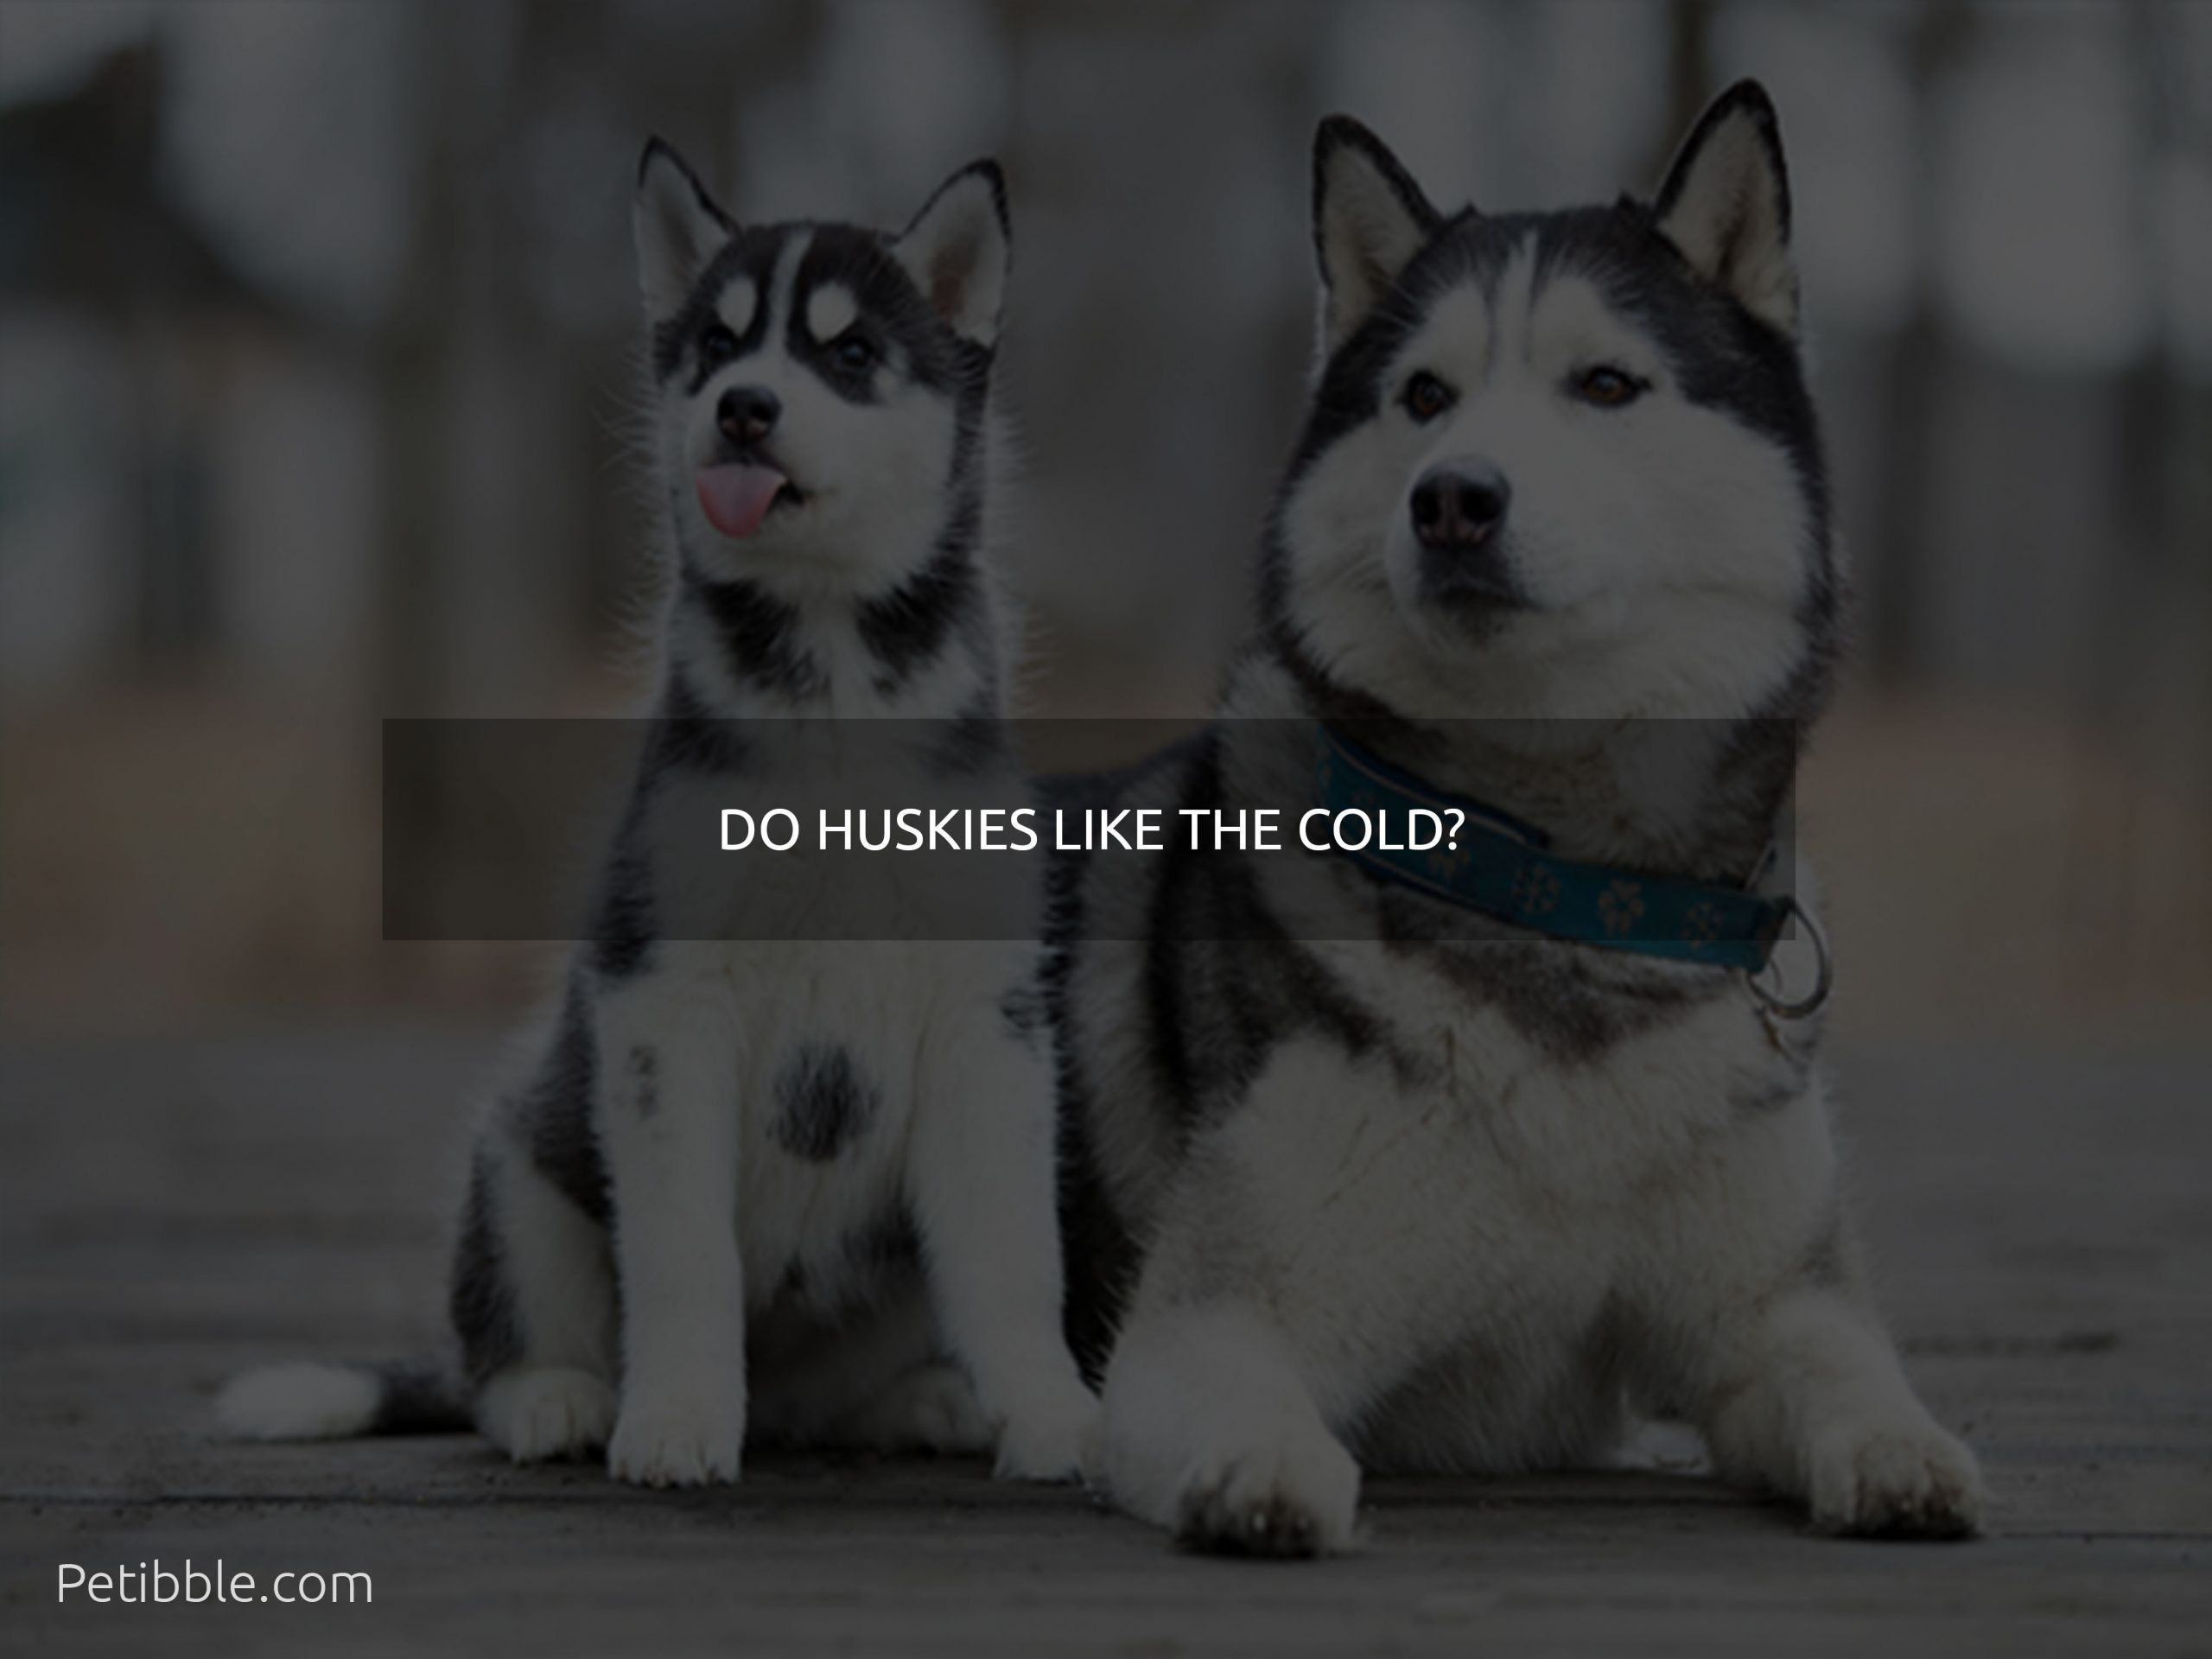 Do huskies like the cold?